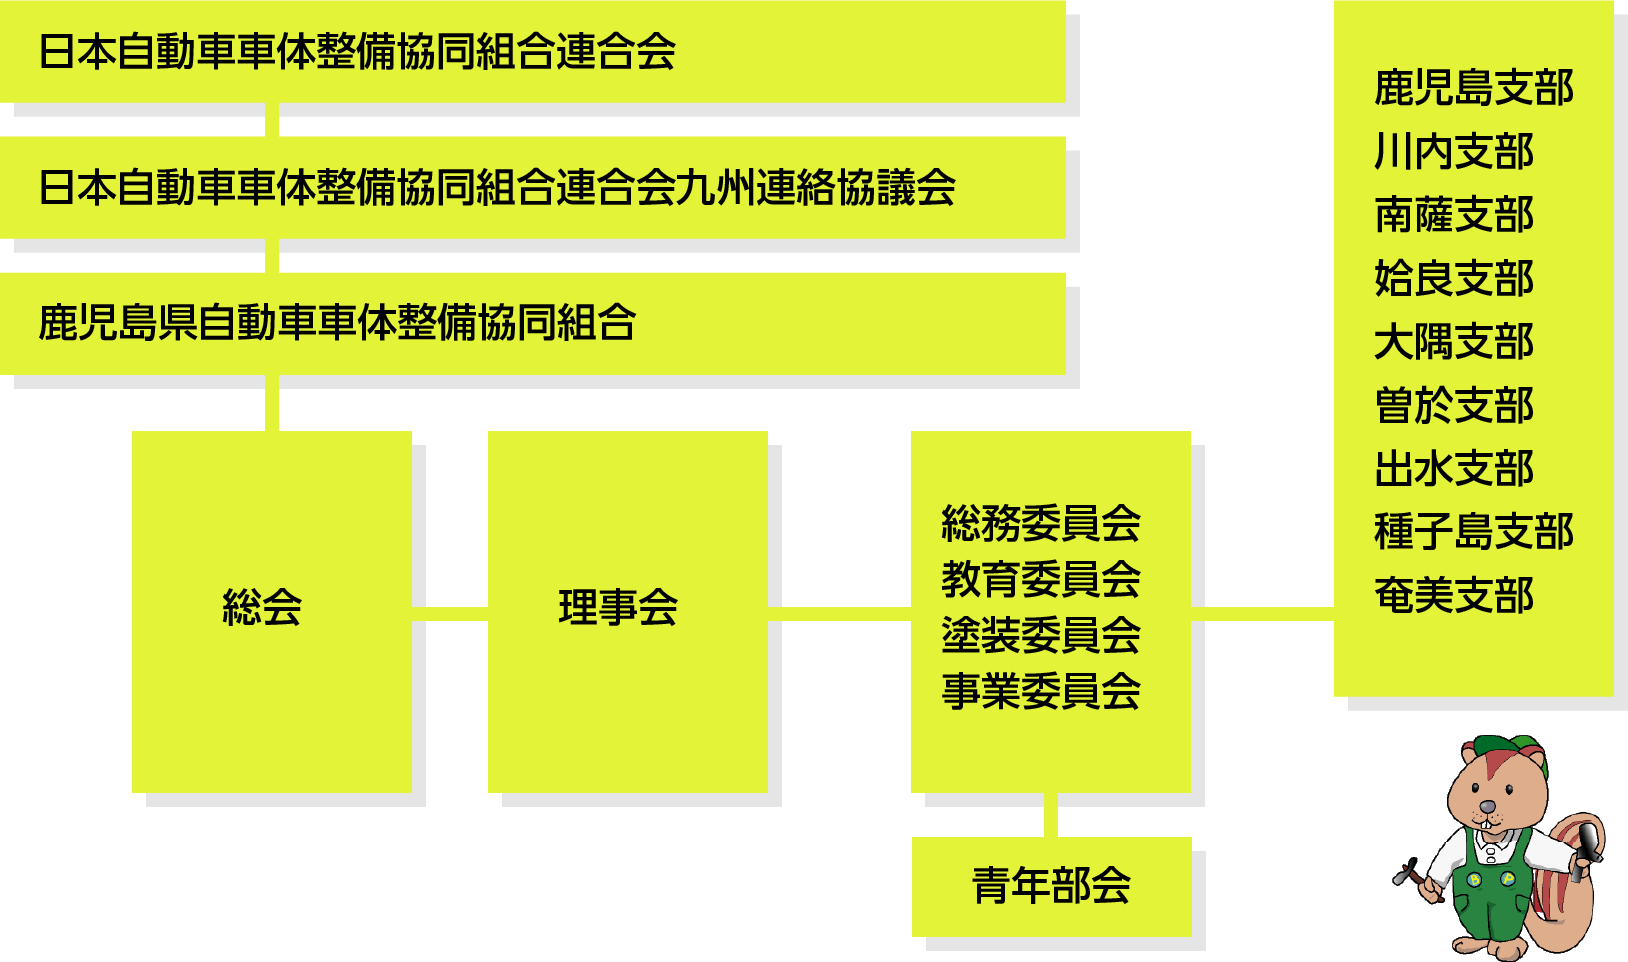 車体整備工場の組織図